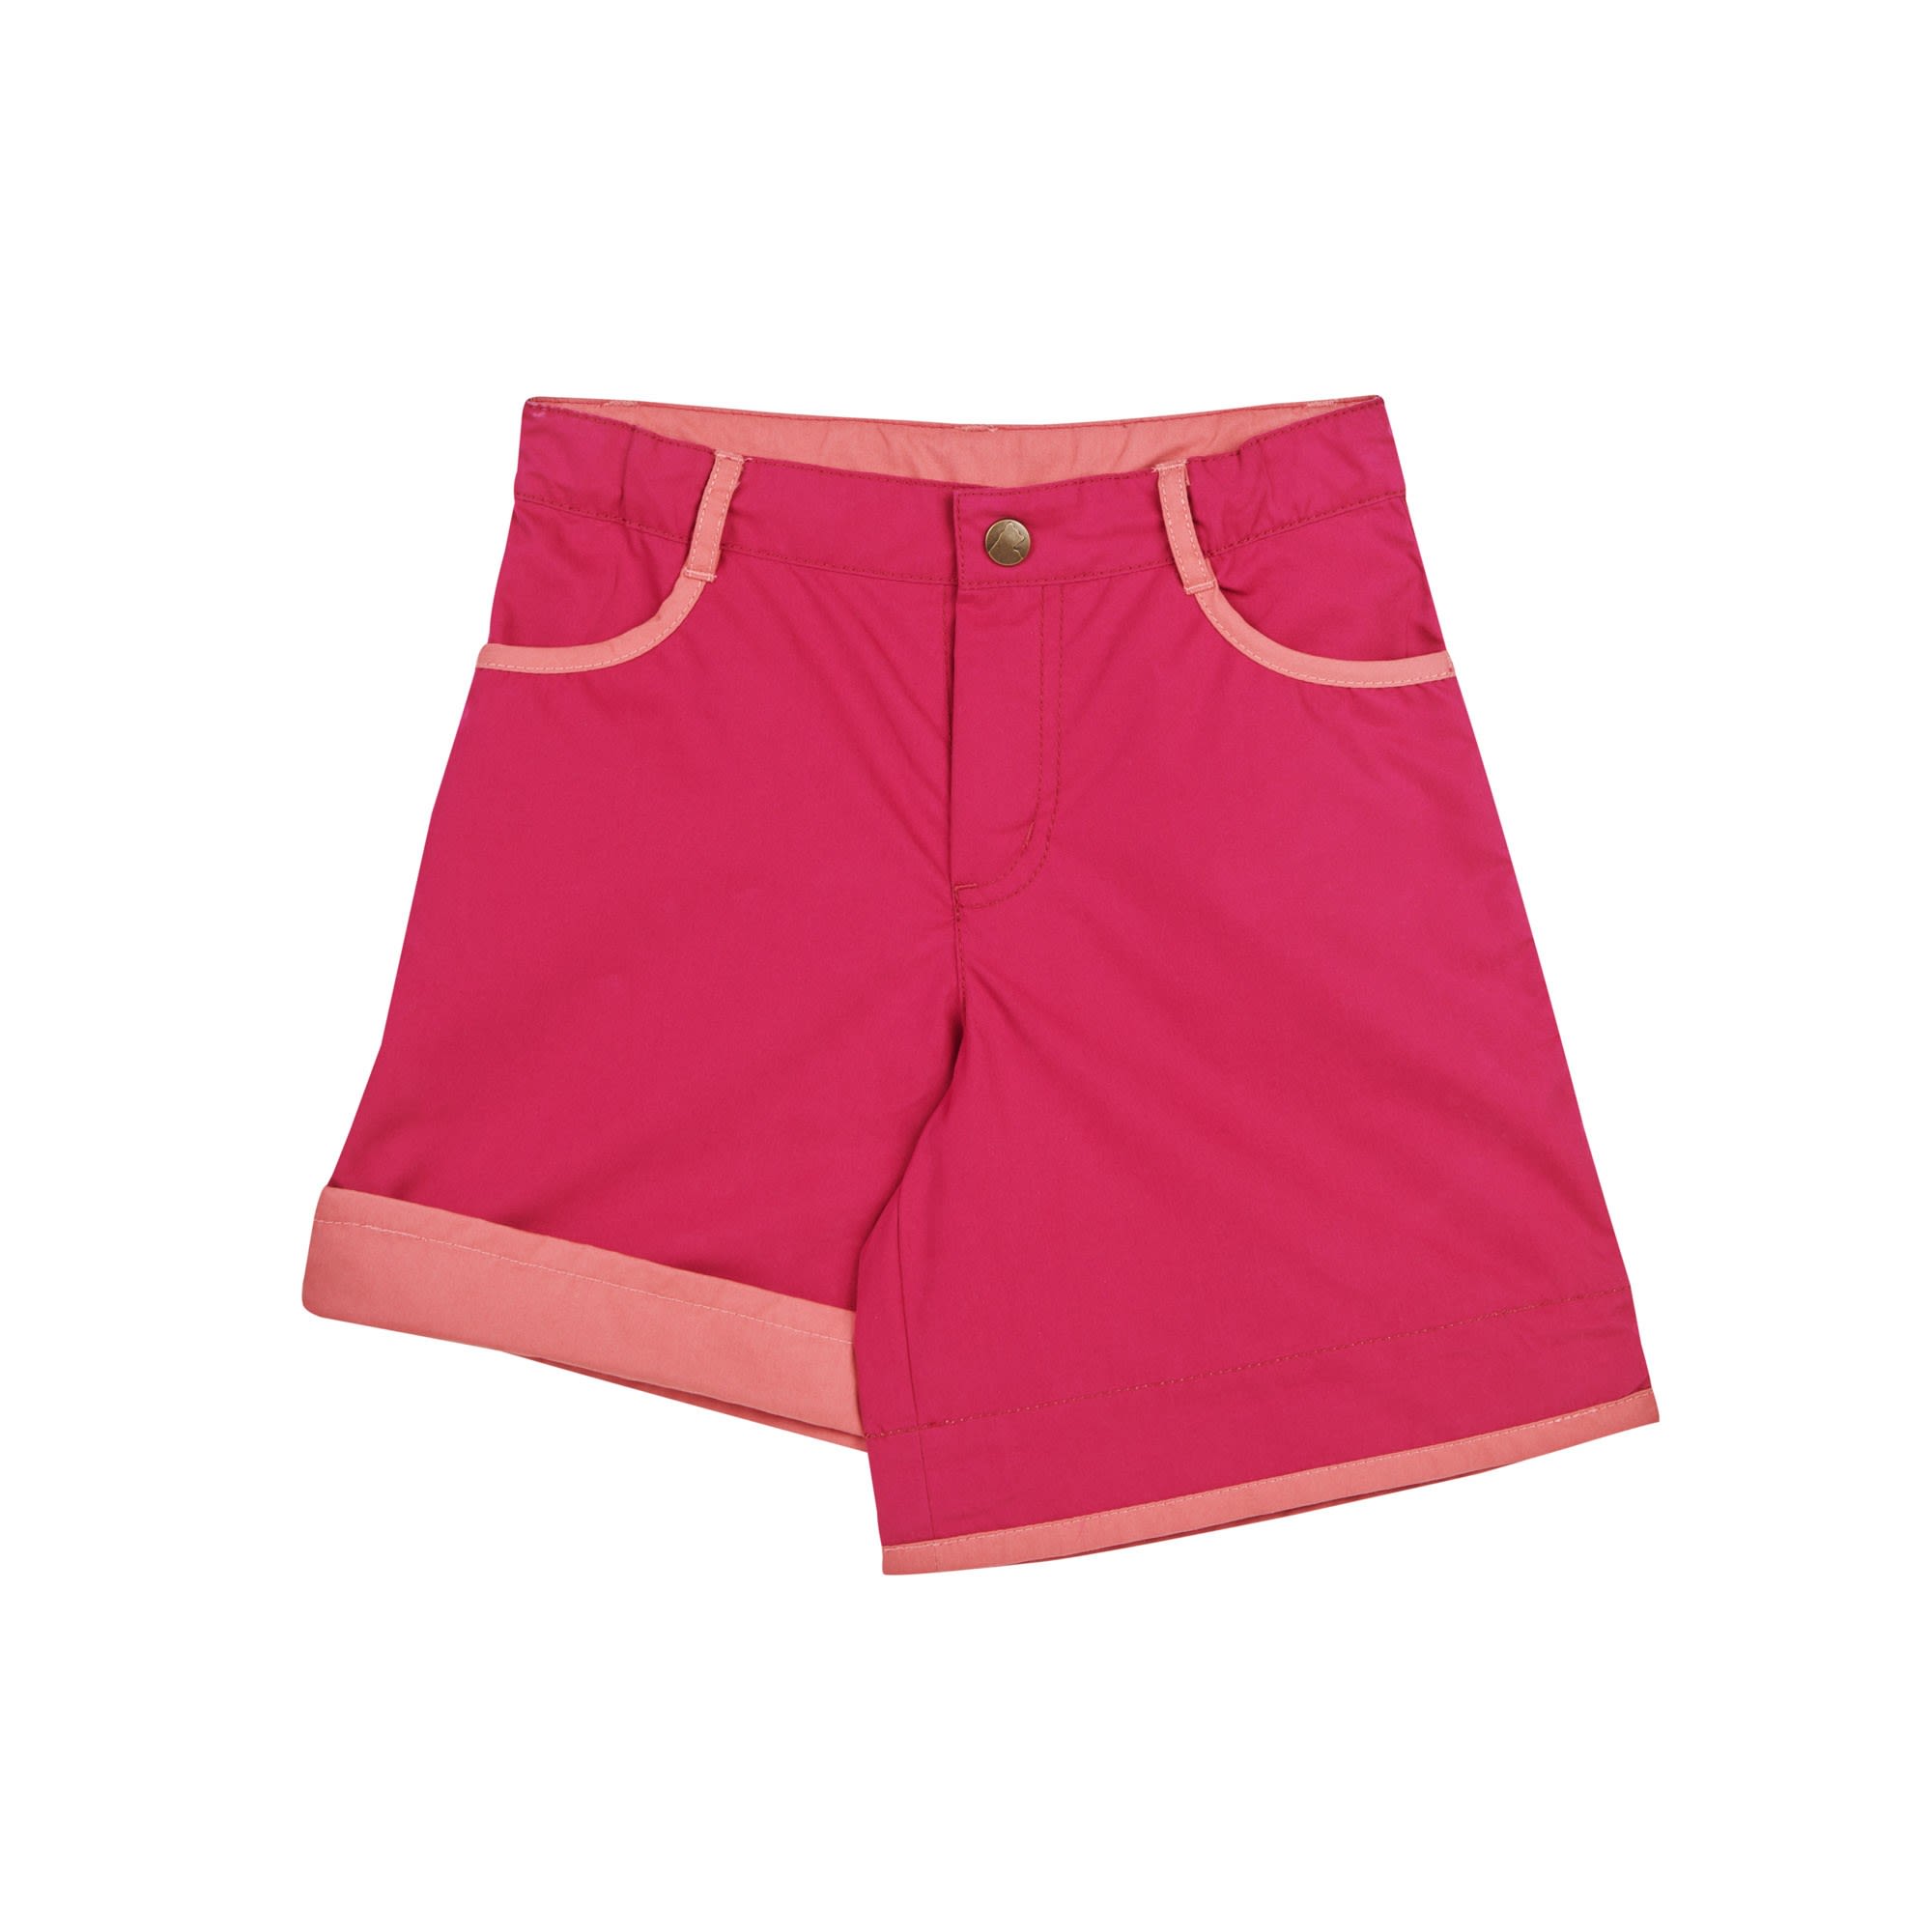 Finkid Girls Kuukkeli Pink- Female Shorts- Grsse 80 - 90 - Farbe Beet Red - Rose